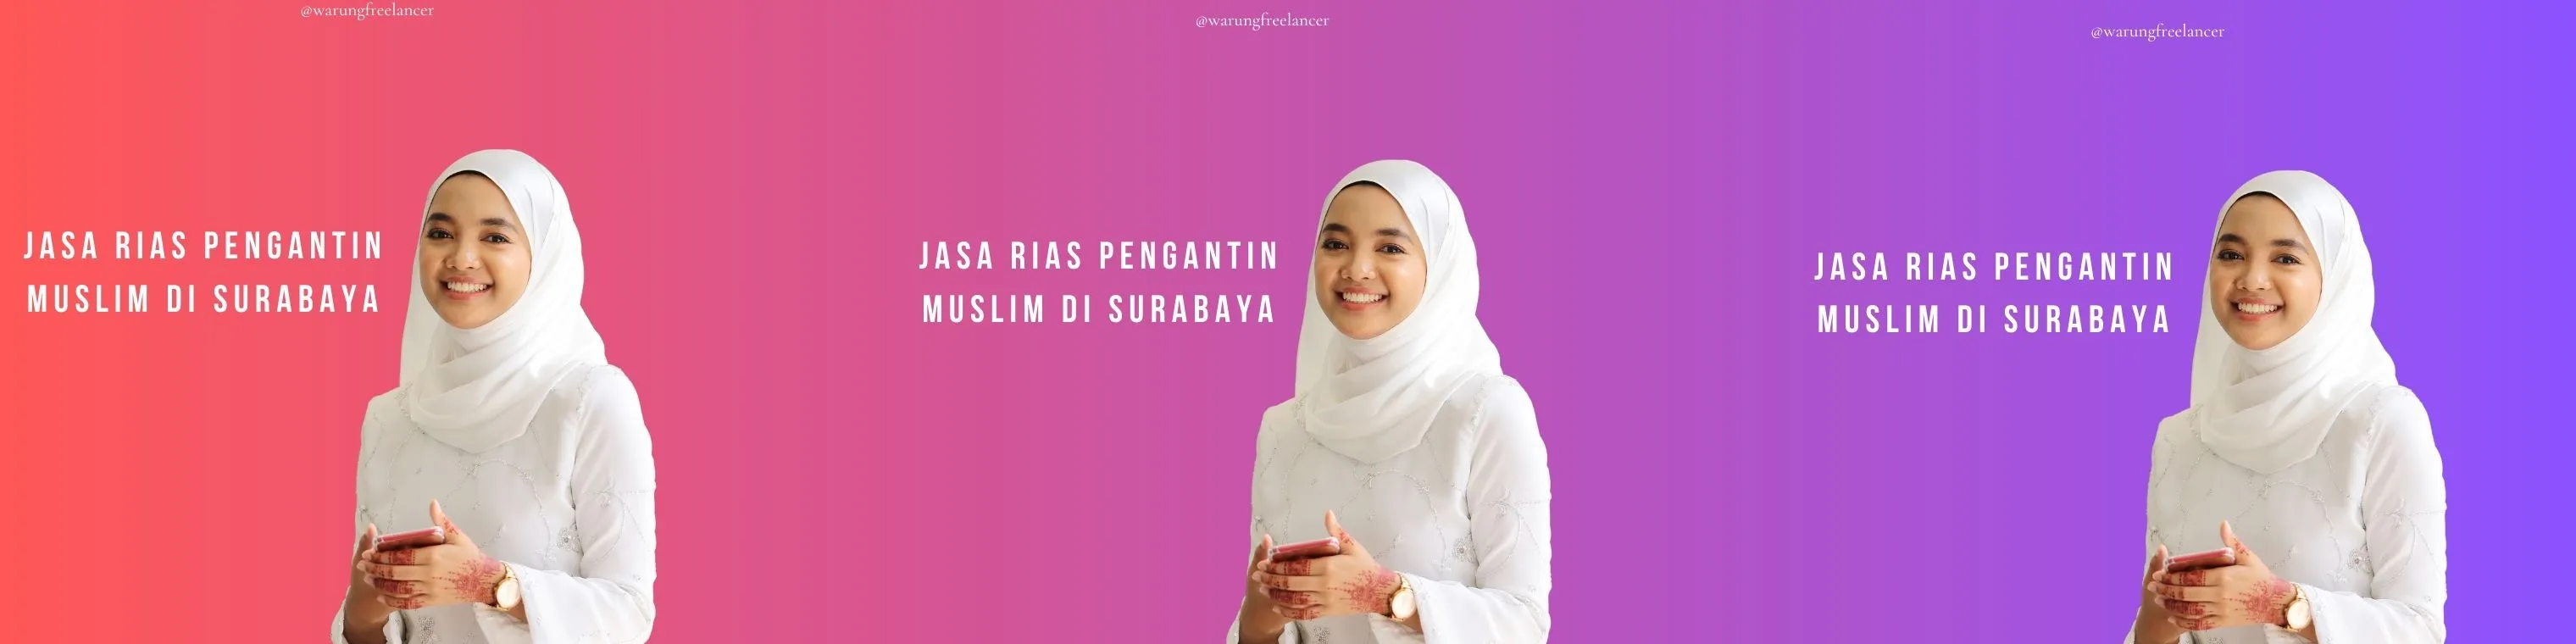 Jasa Rias Pengantin Muslim Surabaya